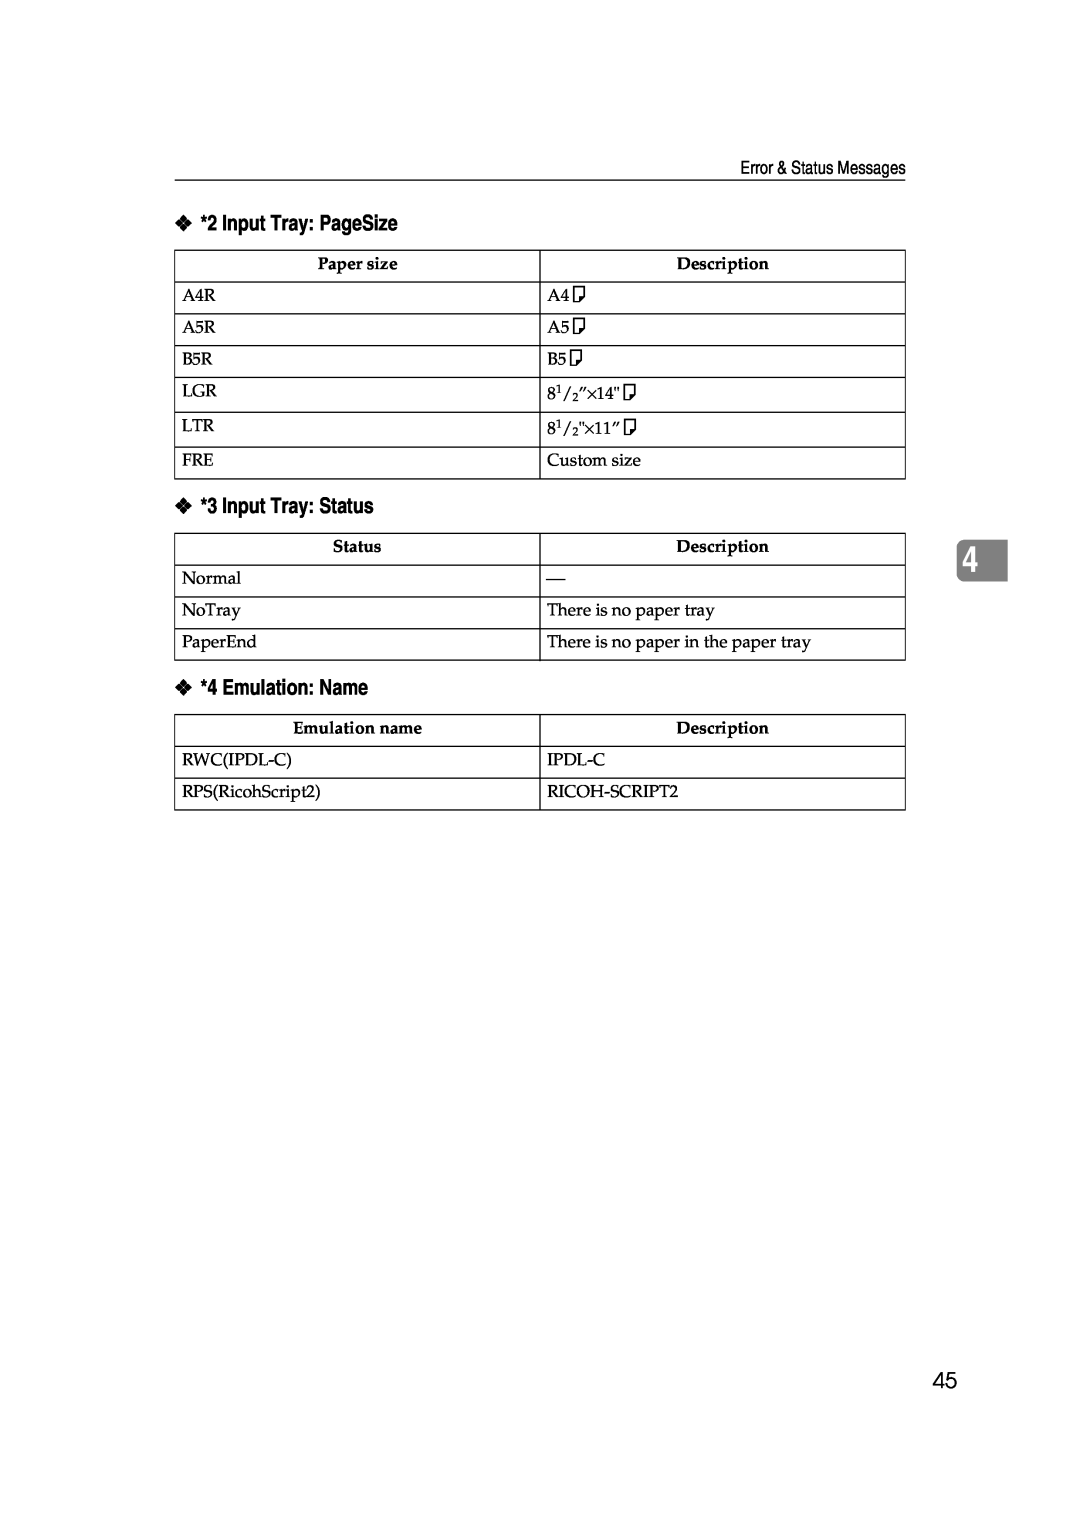 Lanier AP206 manual Input Tray PageSize, Input Tray Status, Emulation Name, Paper size, Description, Emulation name 